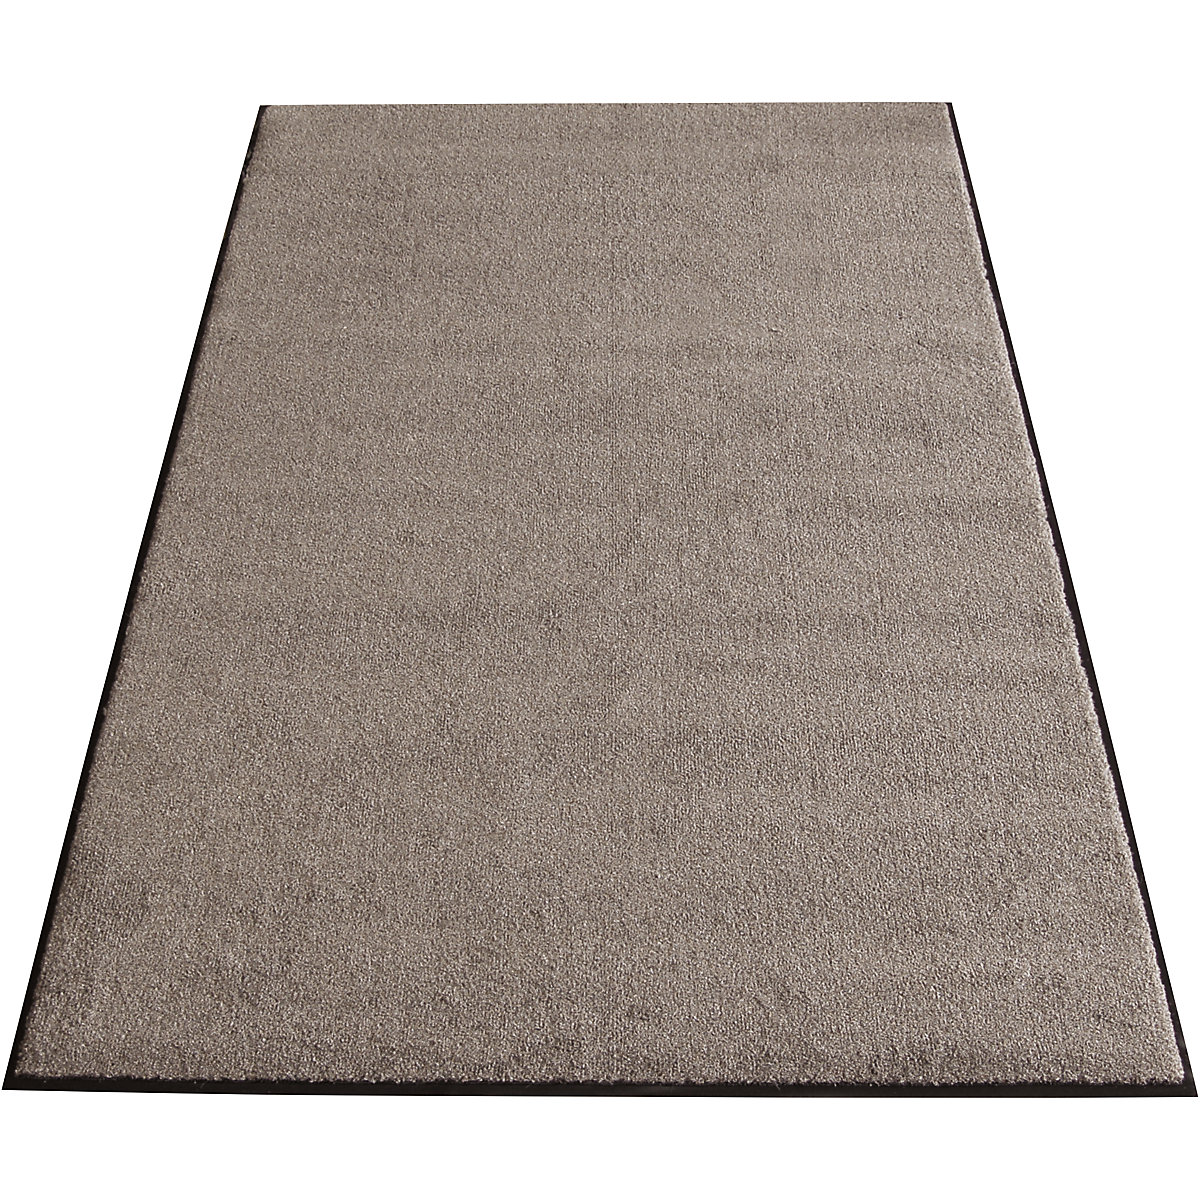 EAZYCARE AQUA entrance matting, LxW 2400 x 1200 mm, brown